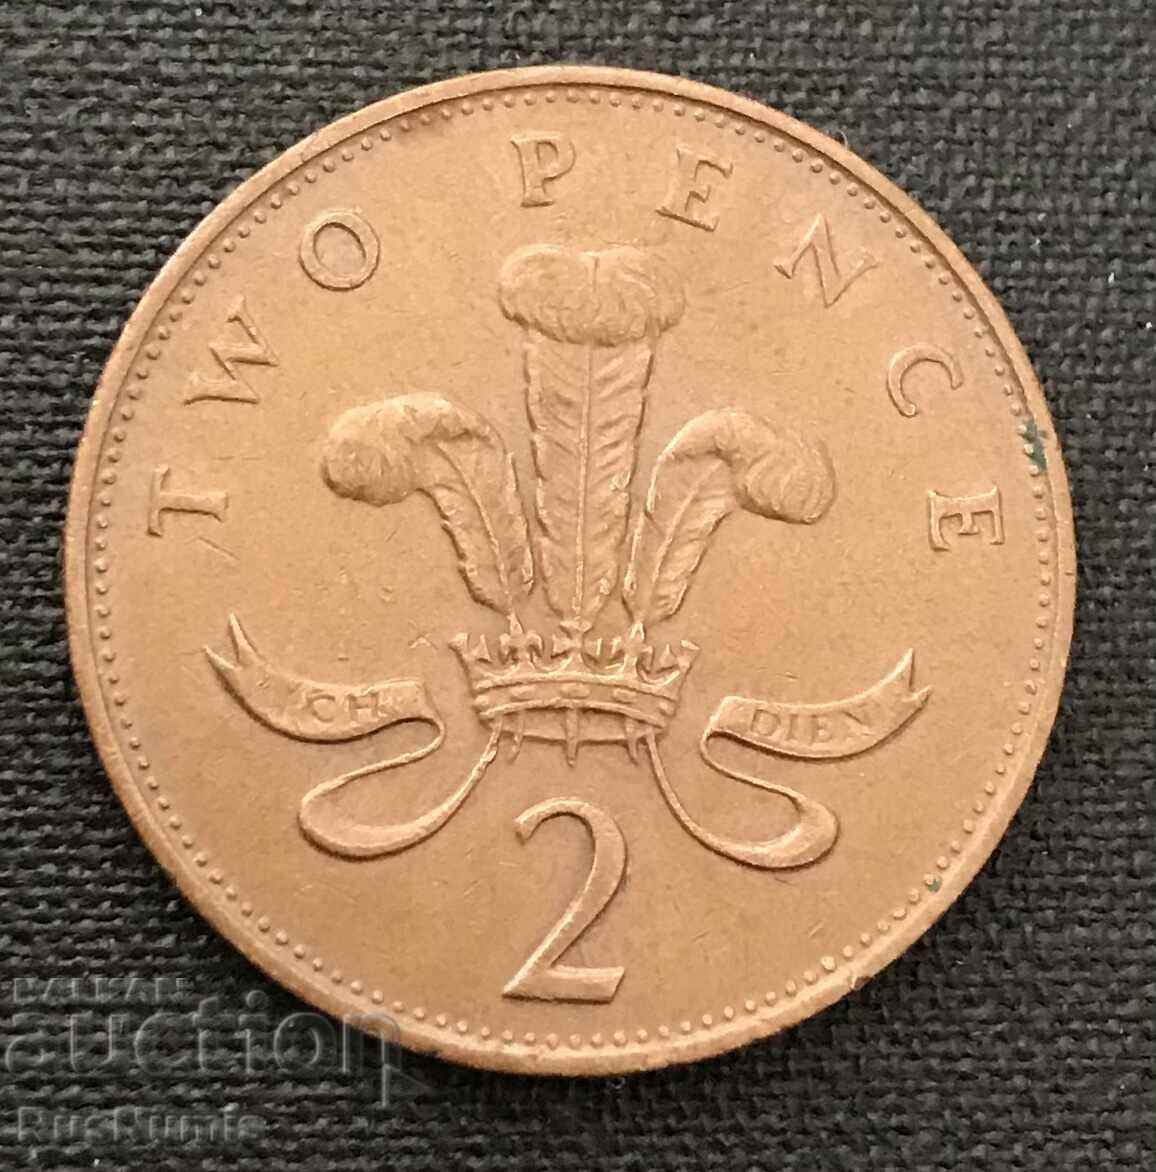 Great Britain. 2 pence 1989